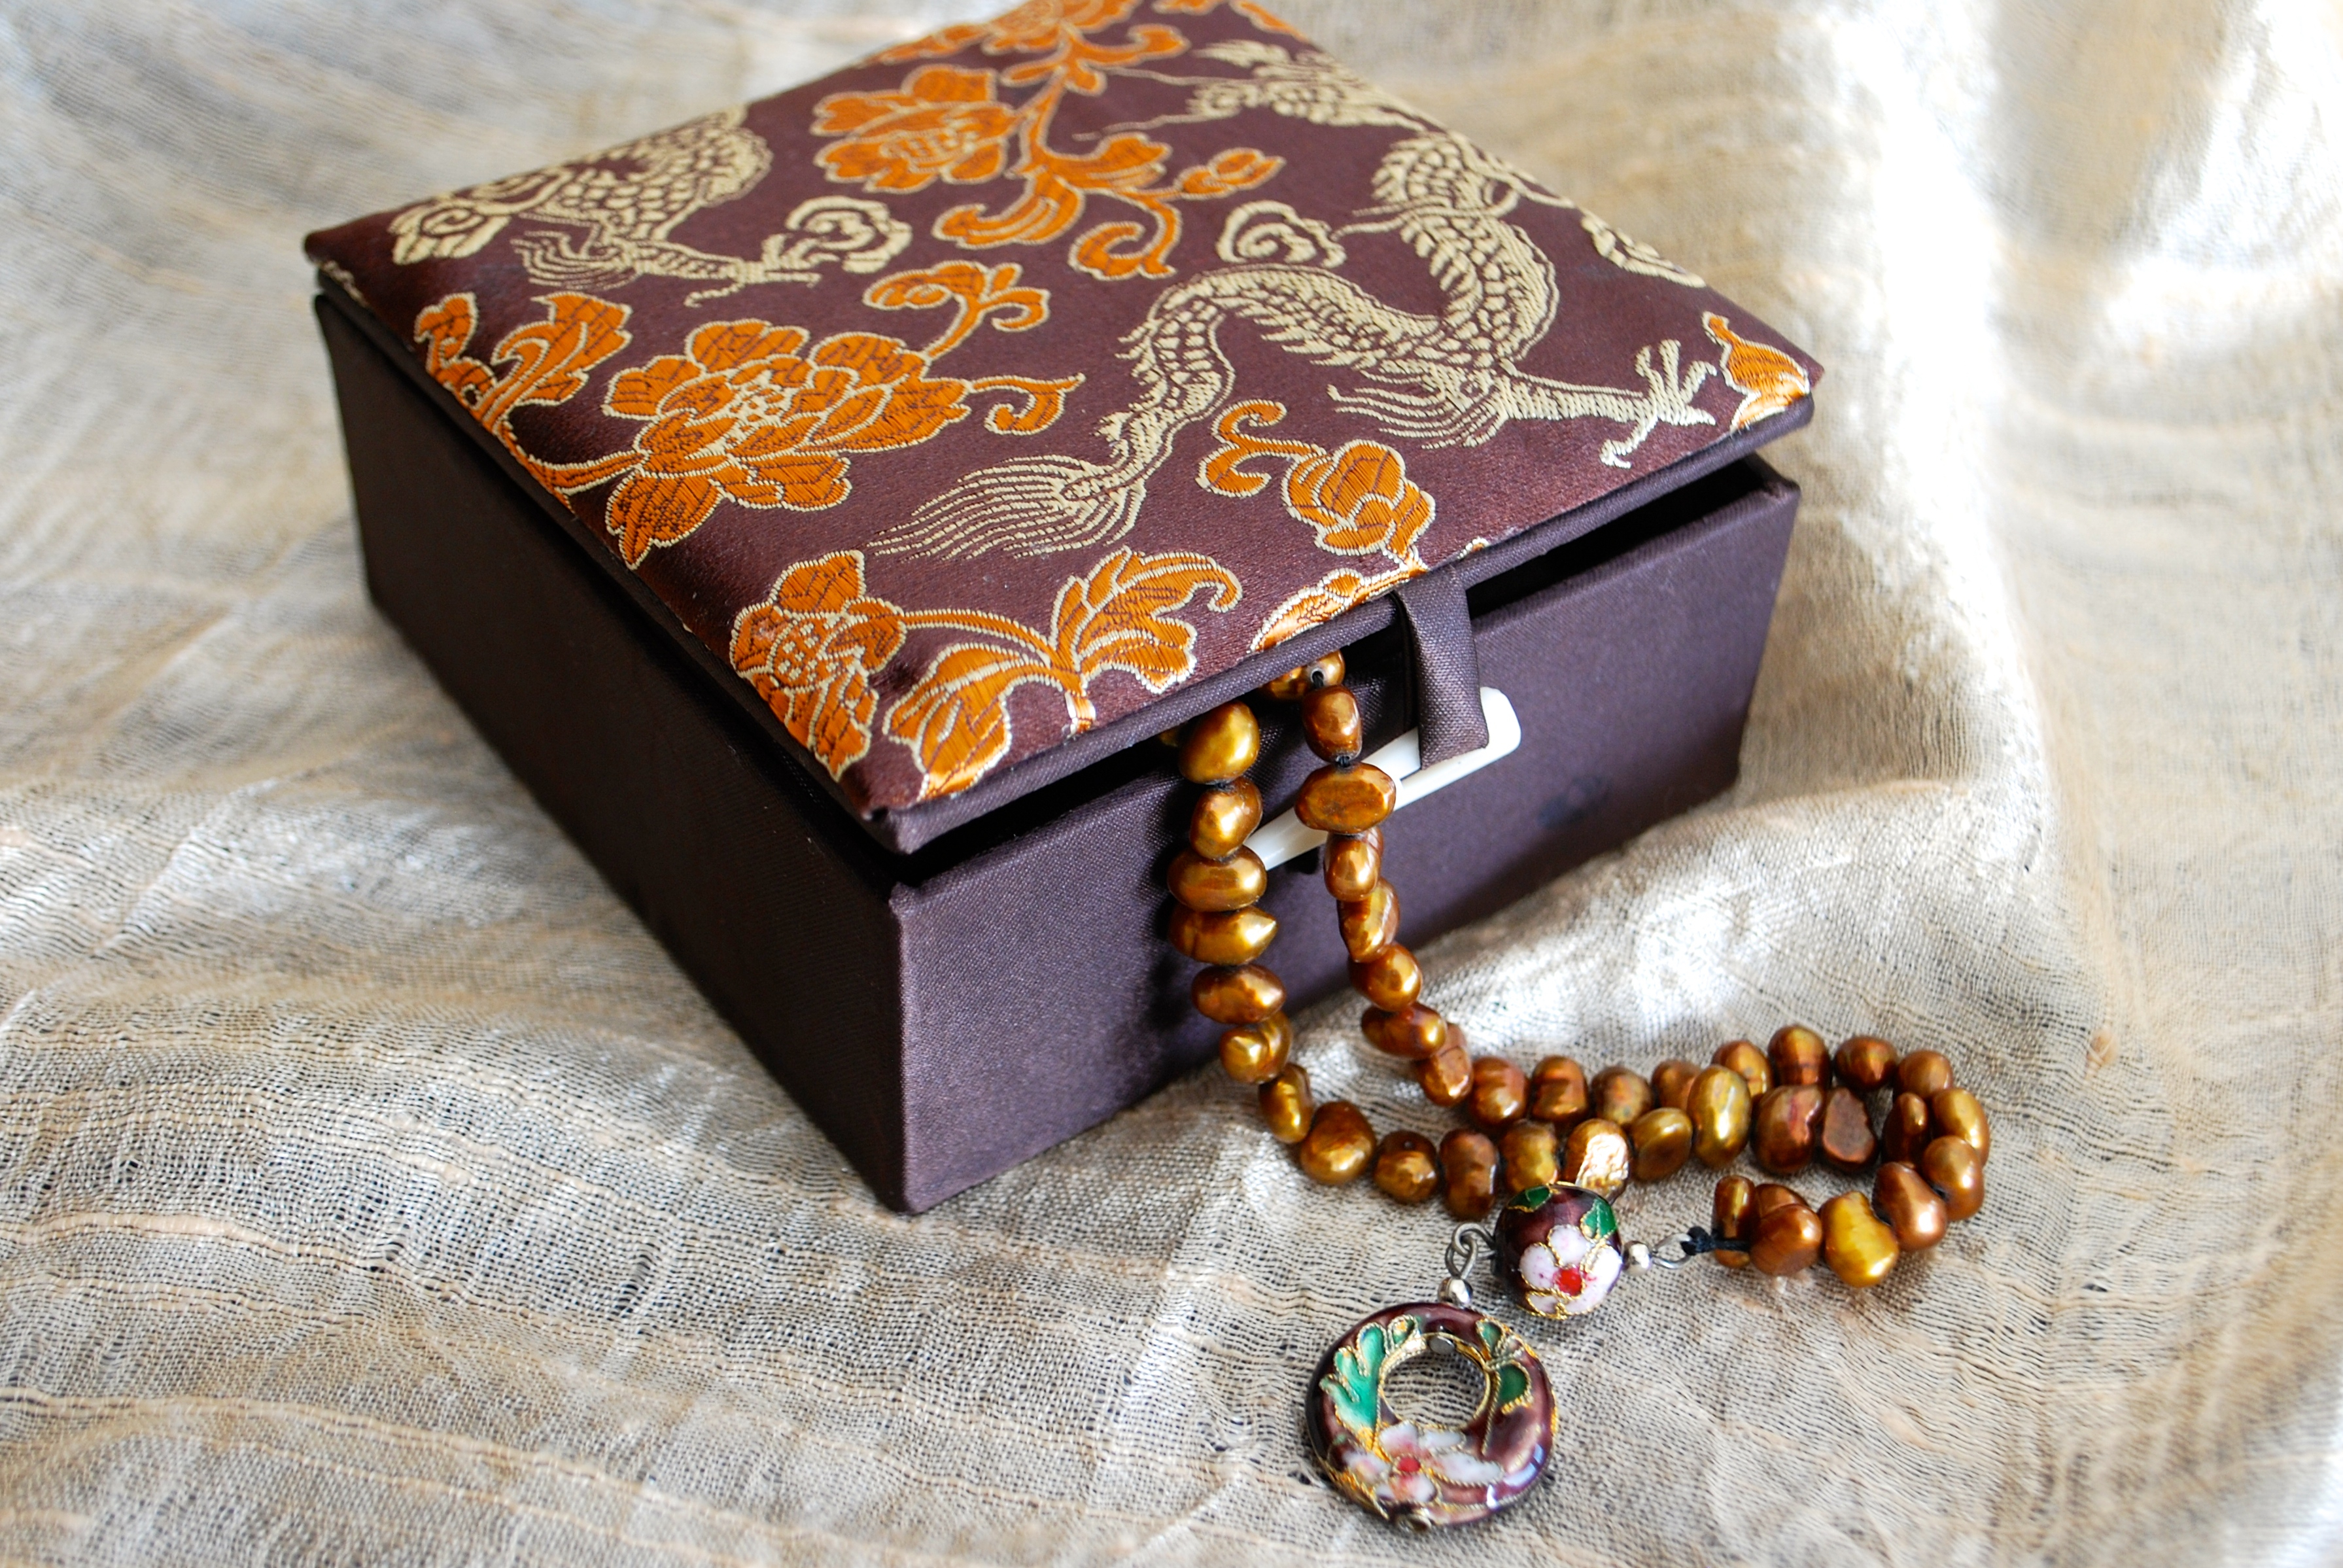 Baha'i Prayer Beads 19x5/plum wood prayer necklace/baha'i gifts - Crealandia